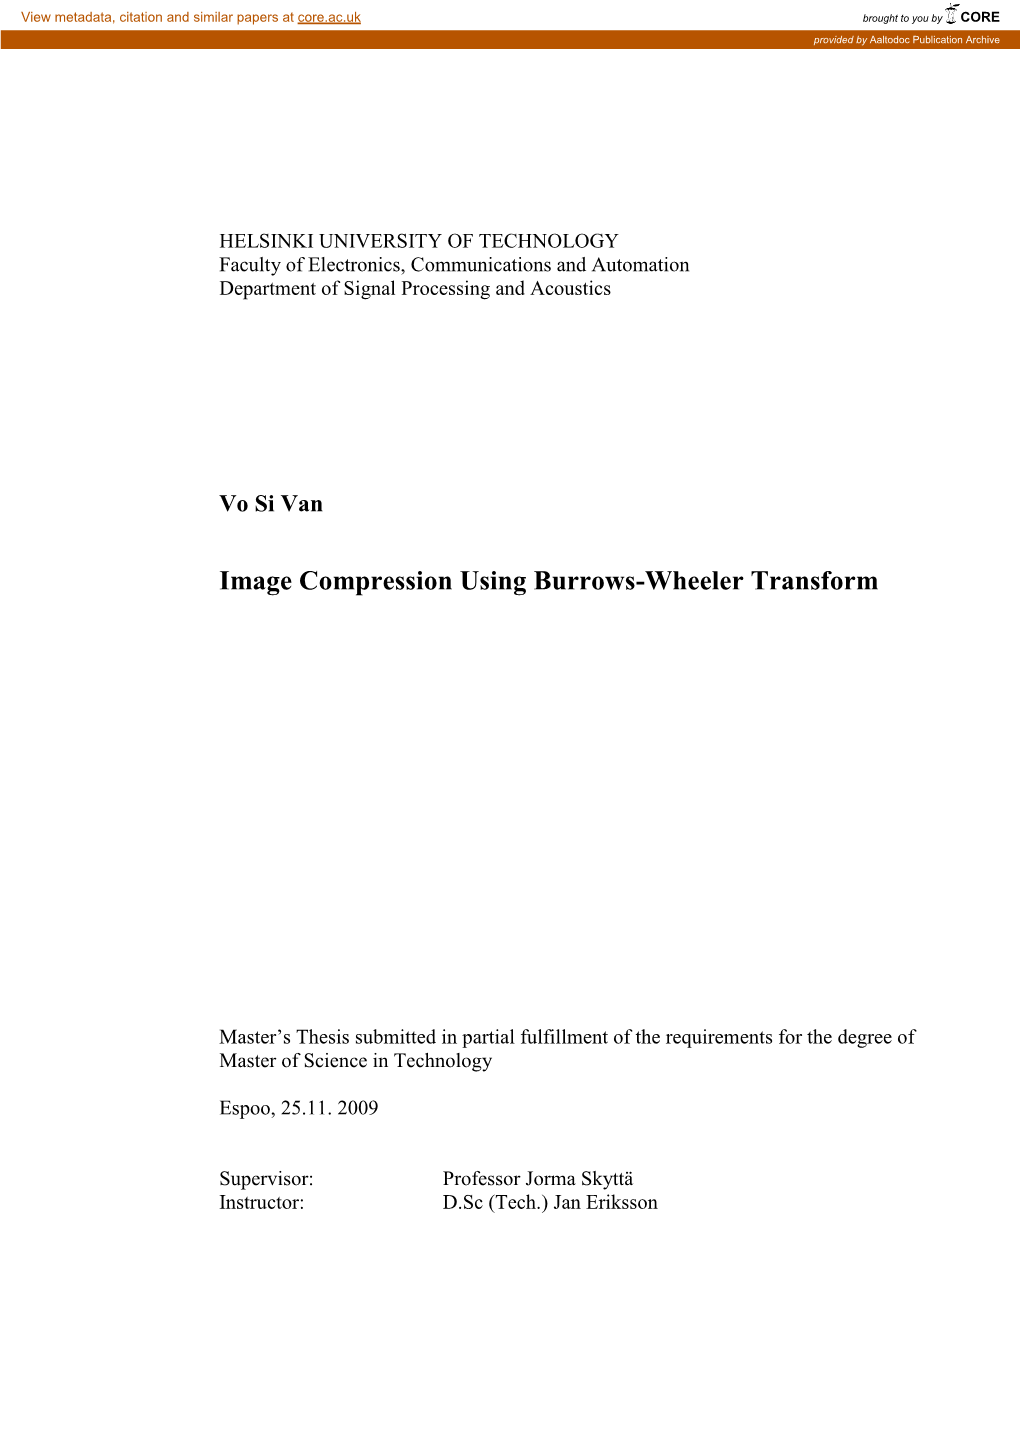 Image Compression Using Burrows-Wheeler Transform